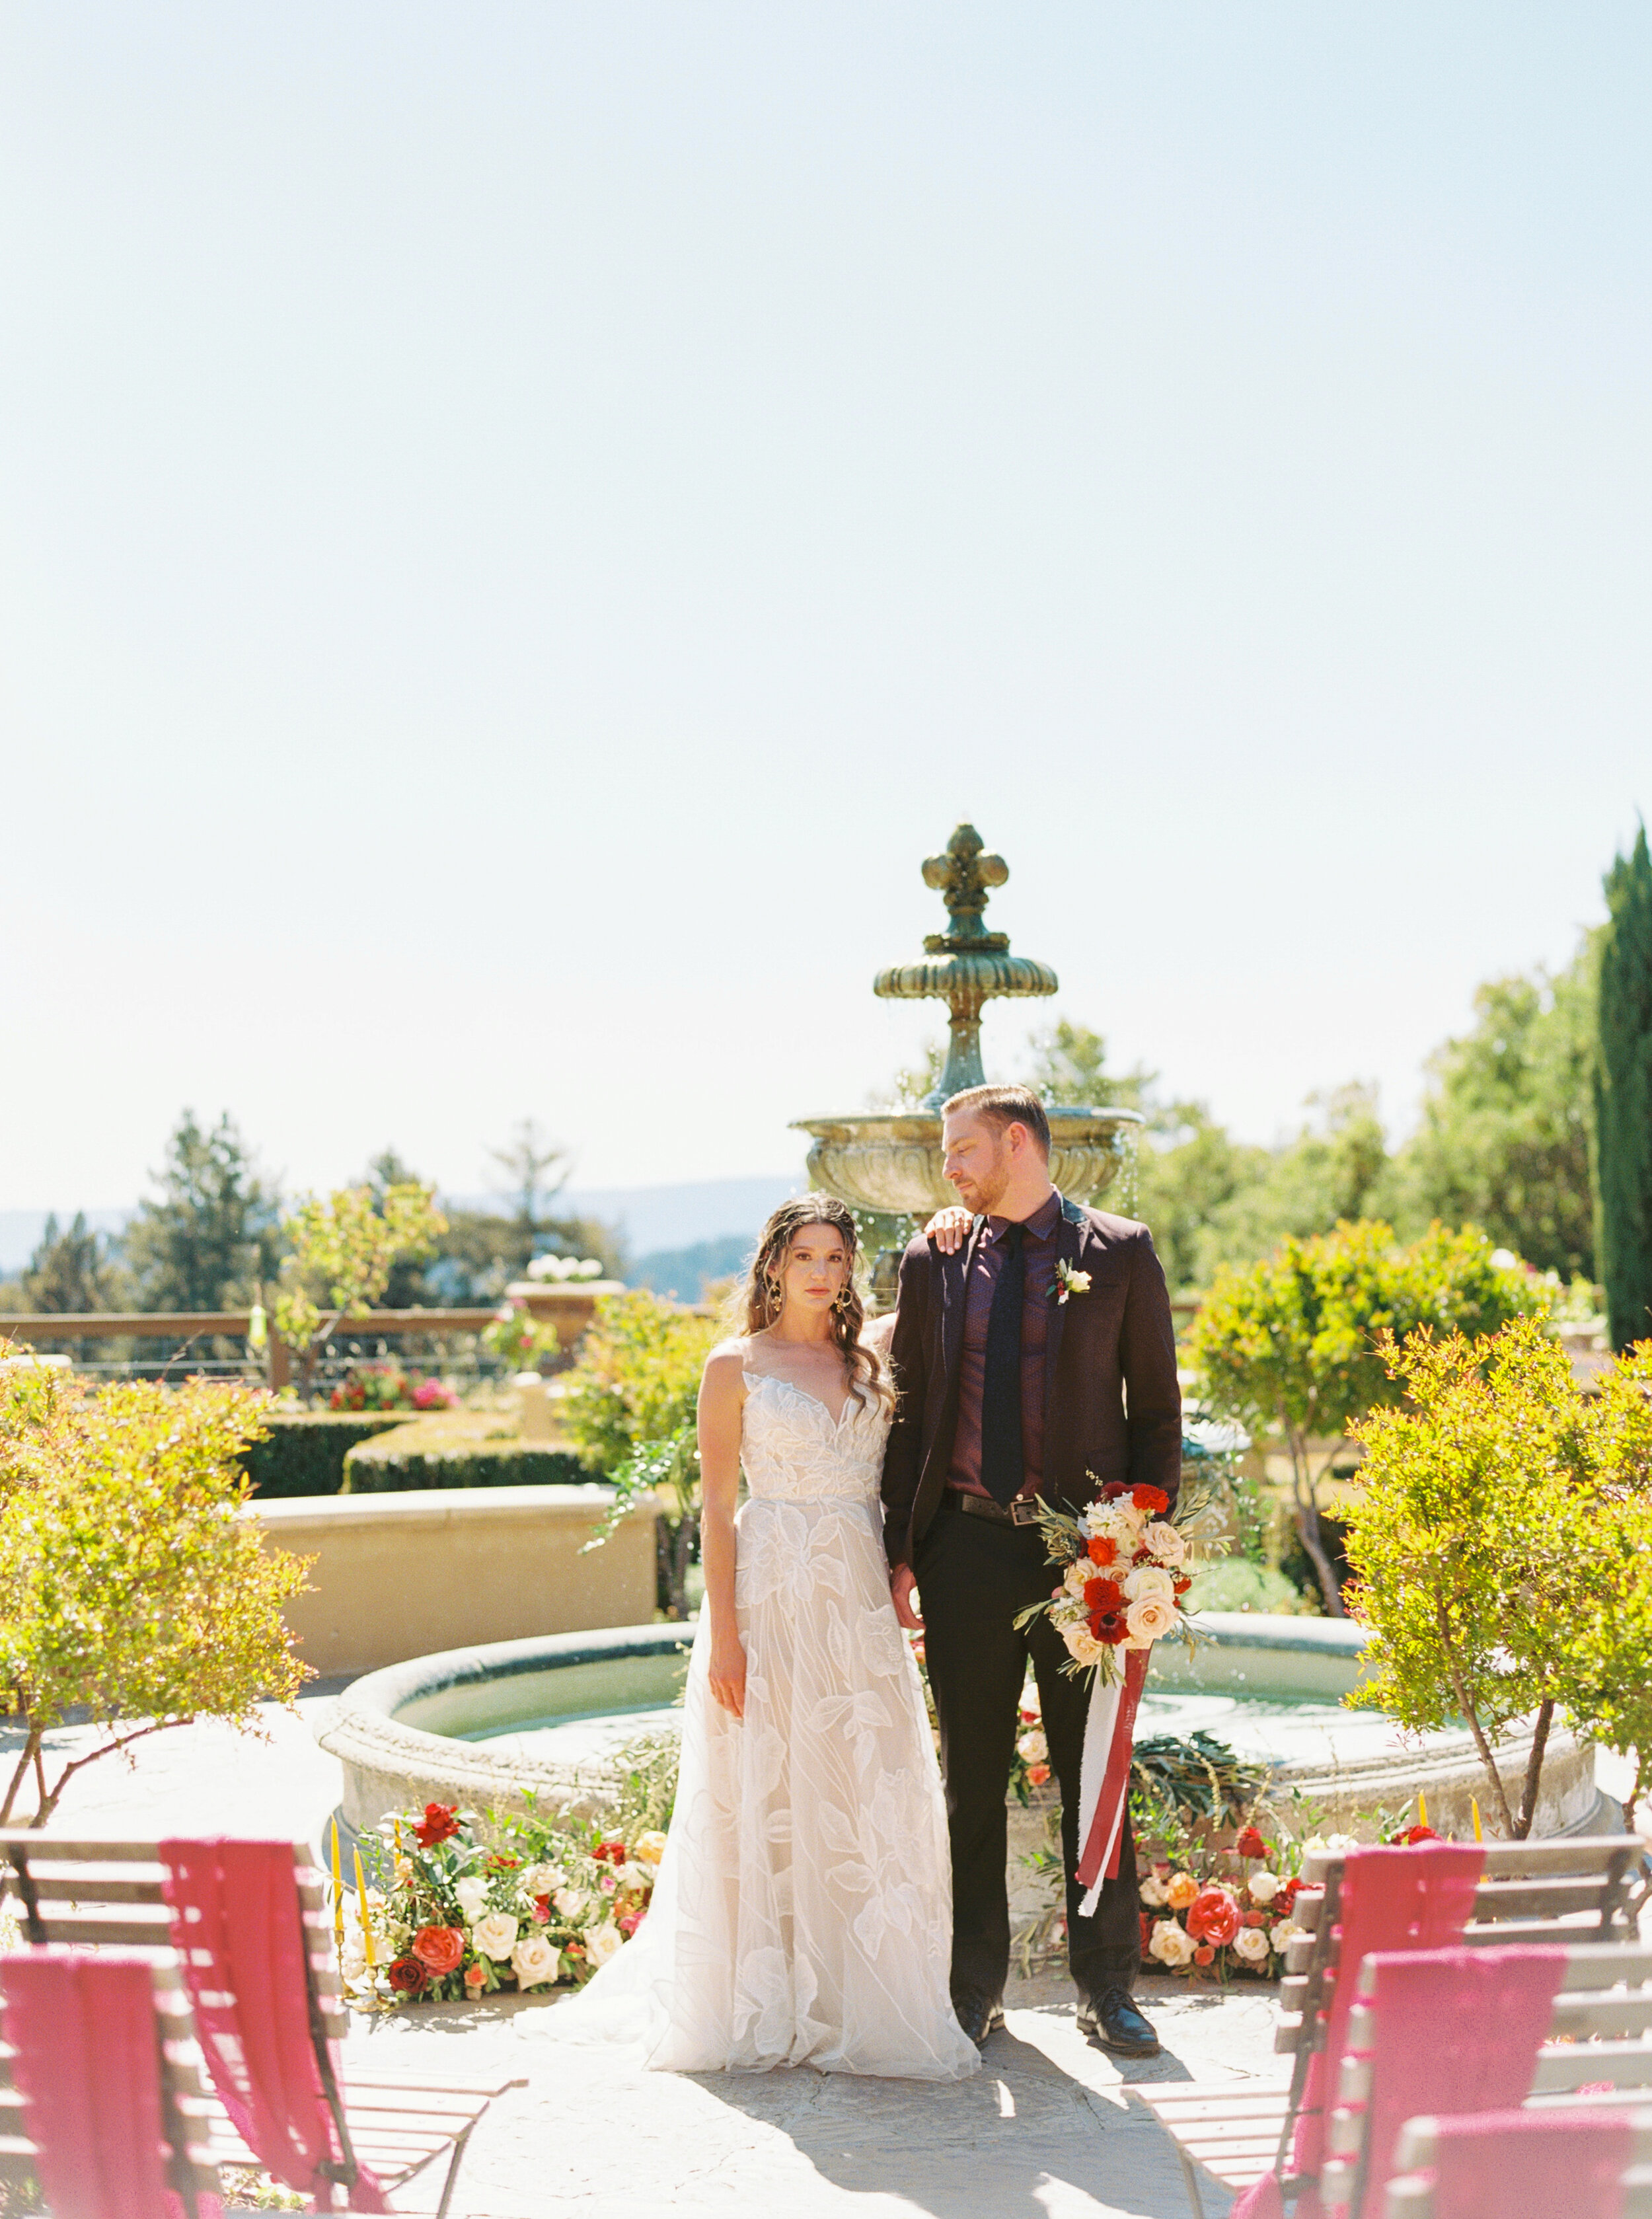 Regale Winery and Vineyards Wedding - Sarahi Hadden Photography-427.jpg